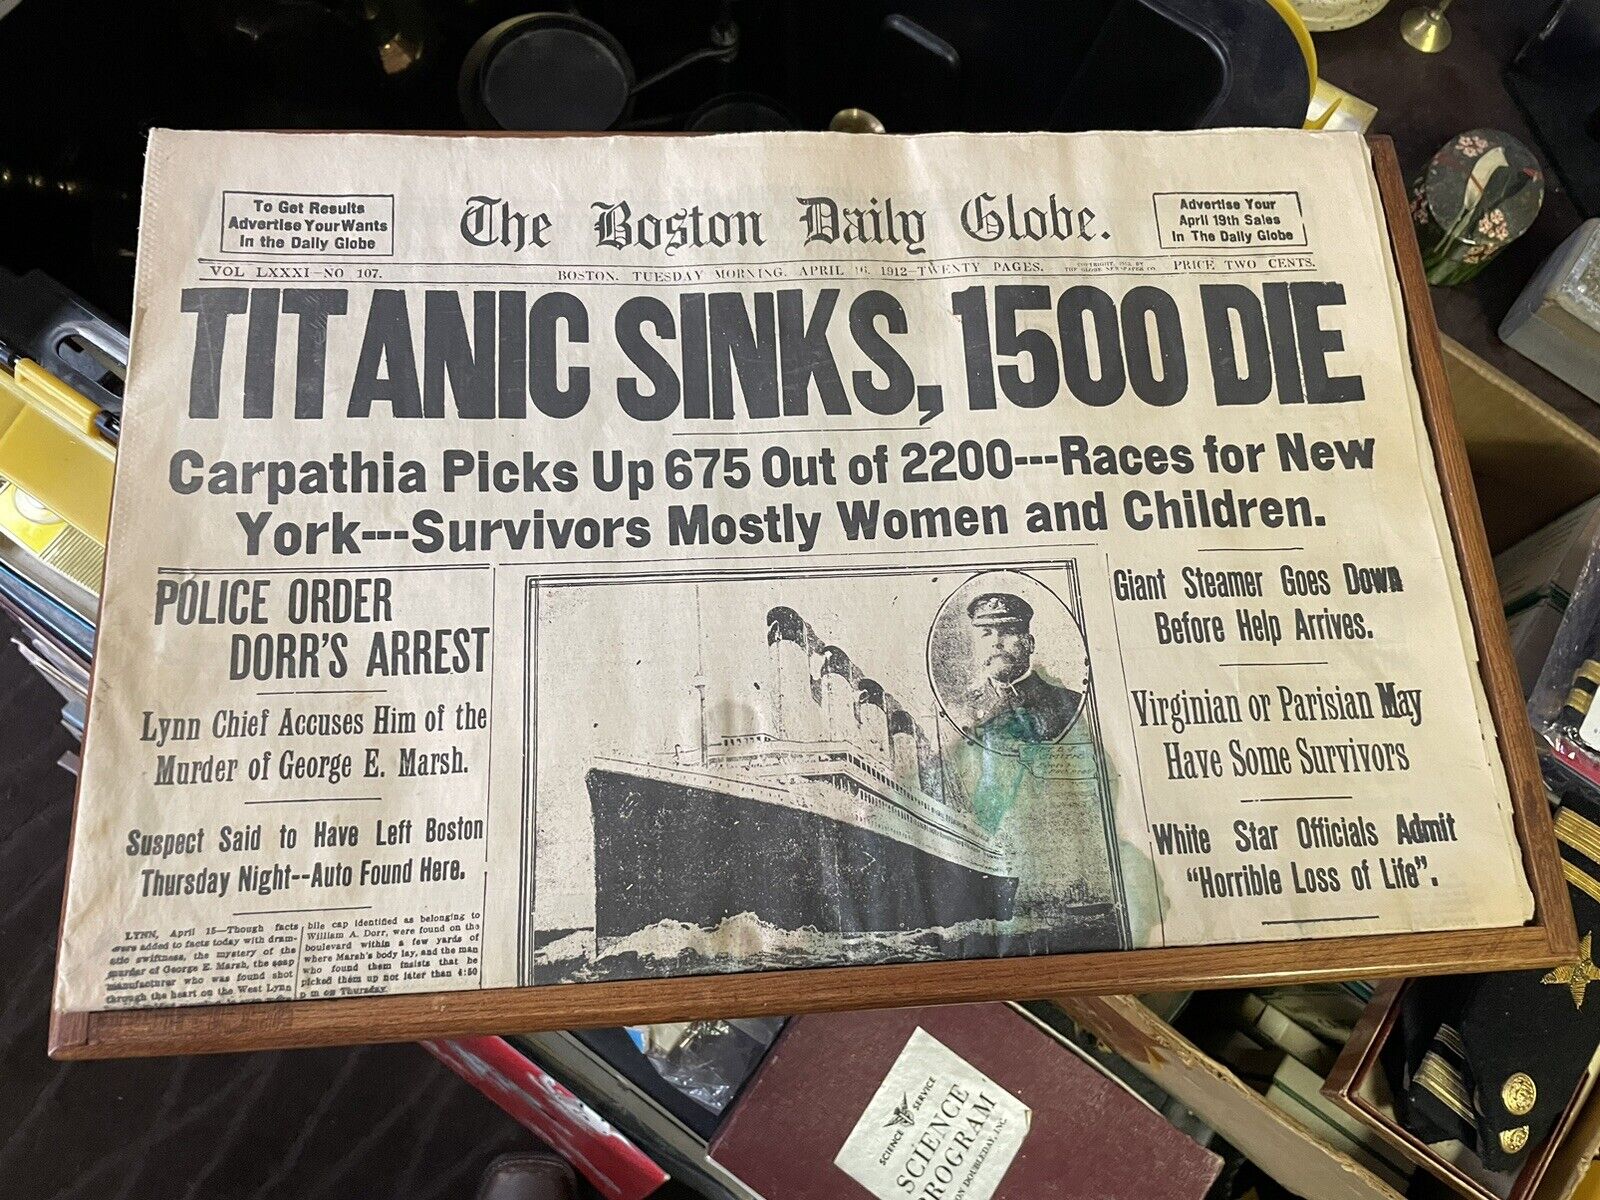 Titanic Sinks, 1500 Die The Boston Daily Globe 1912